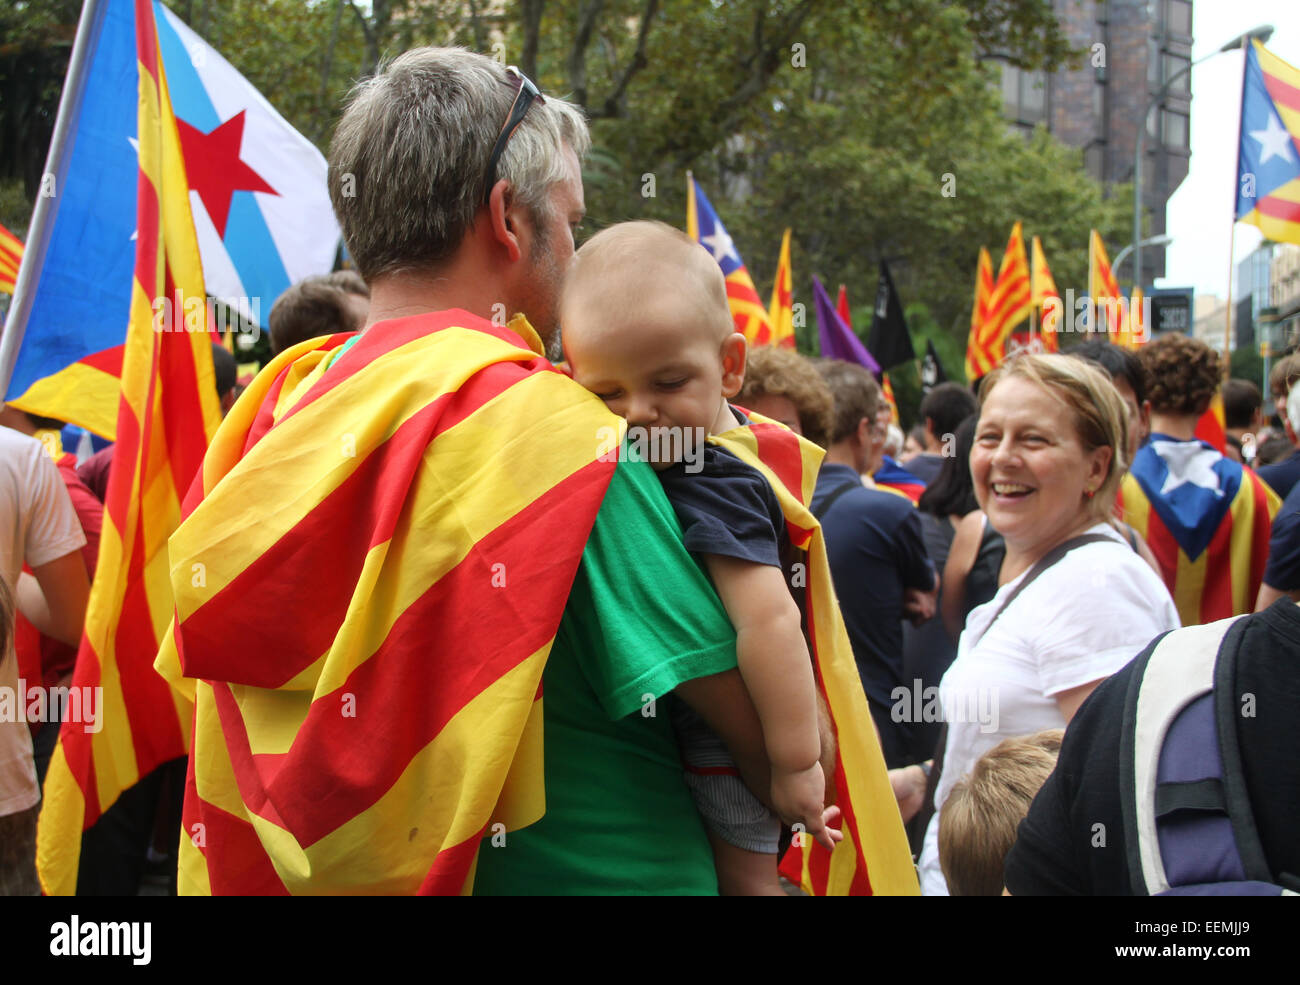 People with Catalan flags celebrating the National Day of Catalonia (Diada Nacional de Catalunya) 11 September, Barcelona. Stock Photo